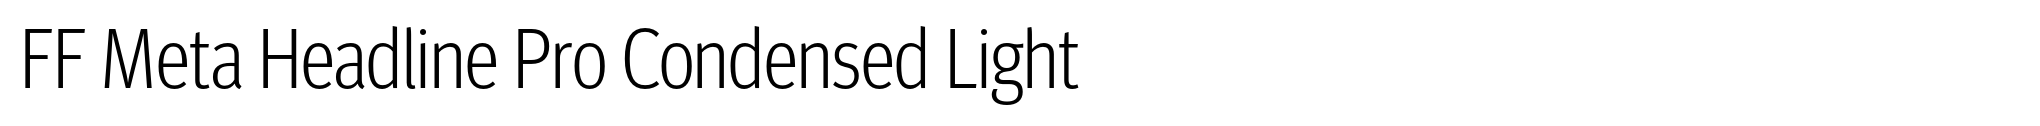 FF Meta Headline Pro Condensed Light image